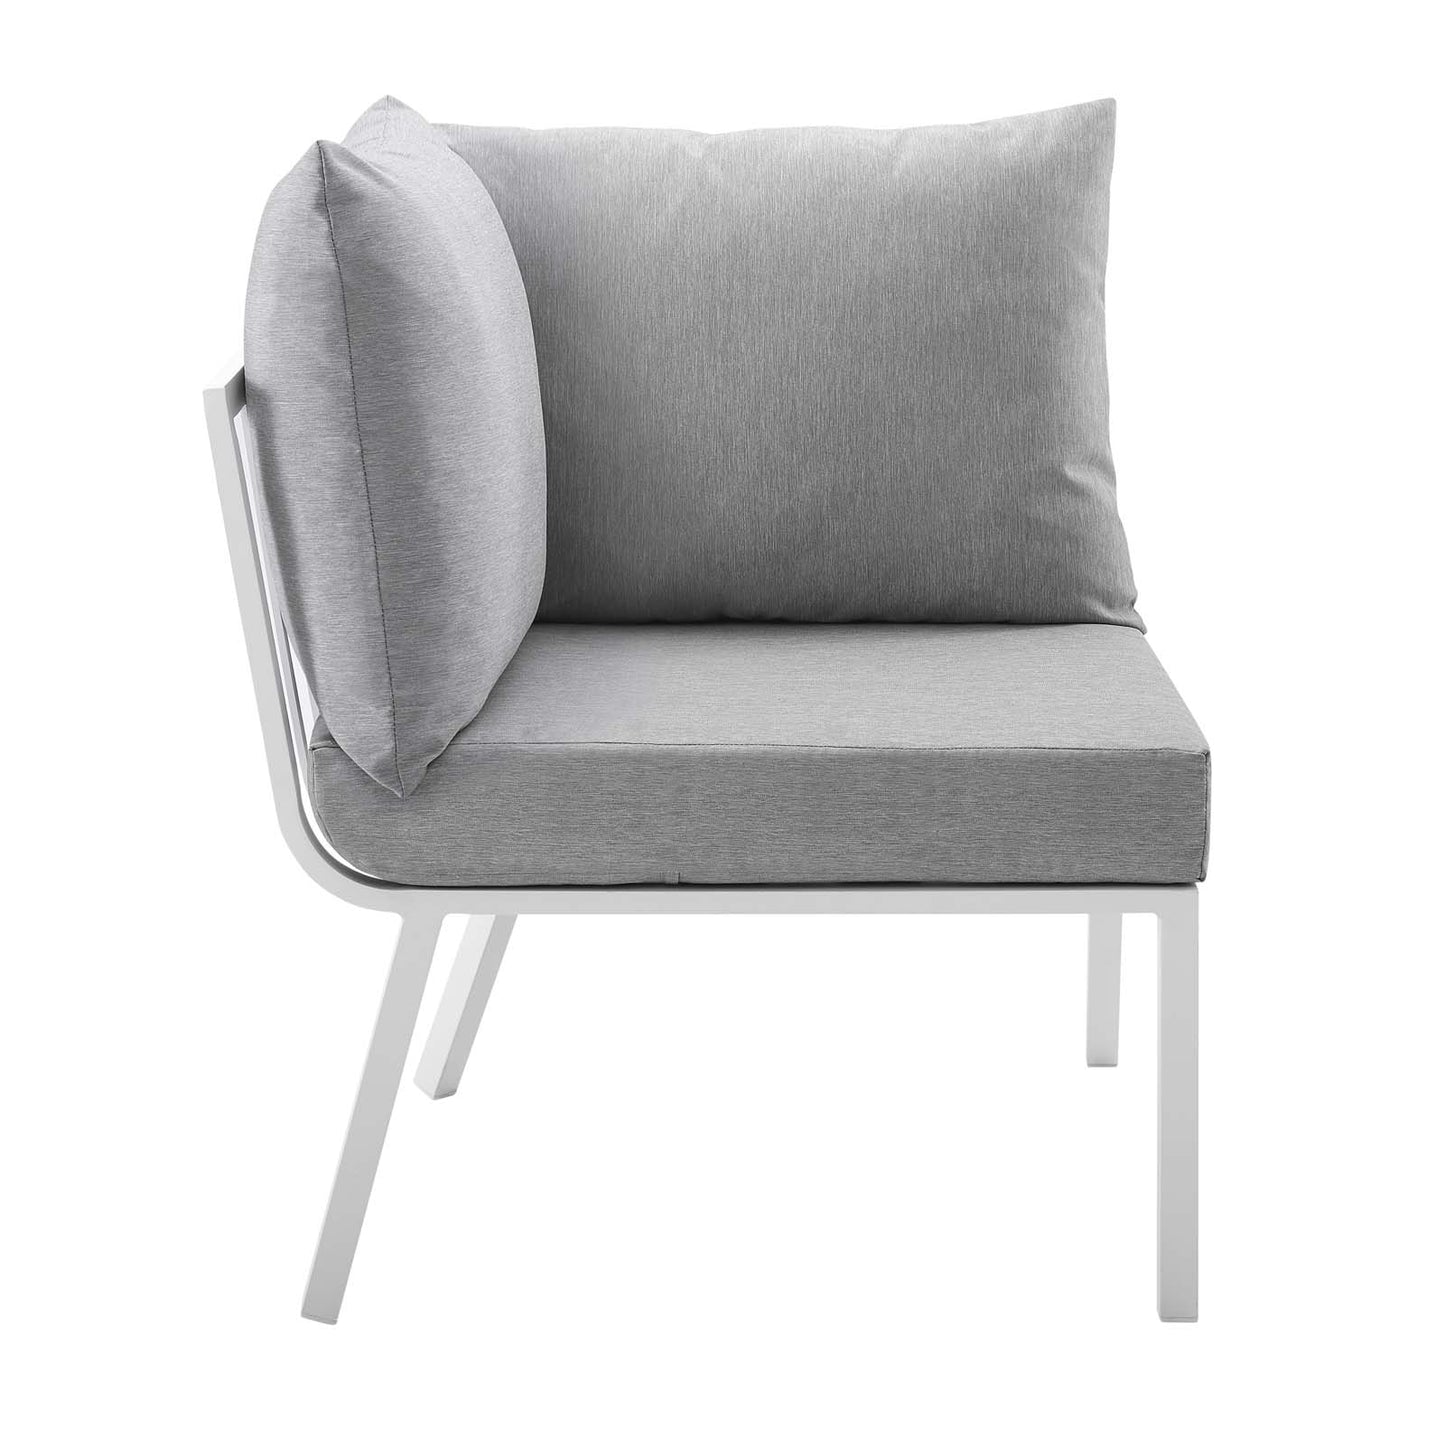 Riverside 2 Piece Outdoor Patio Aluminum Sectional Sofa Set White Gray EEI-3781-WHI-GRY